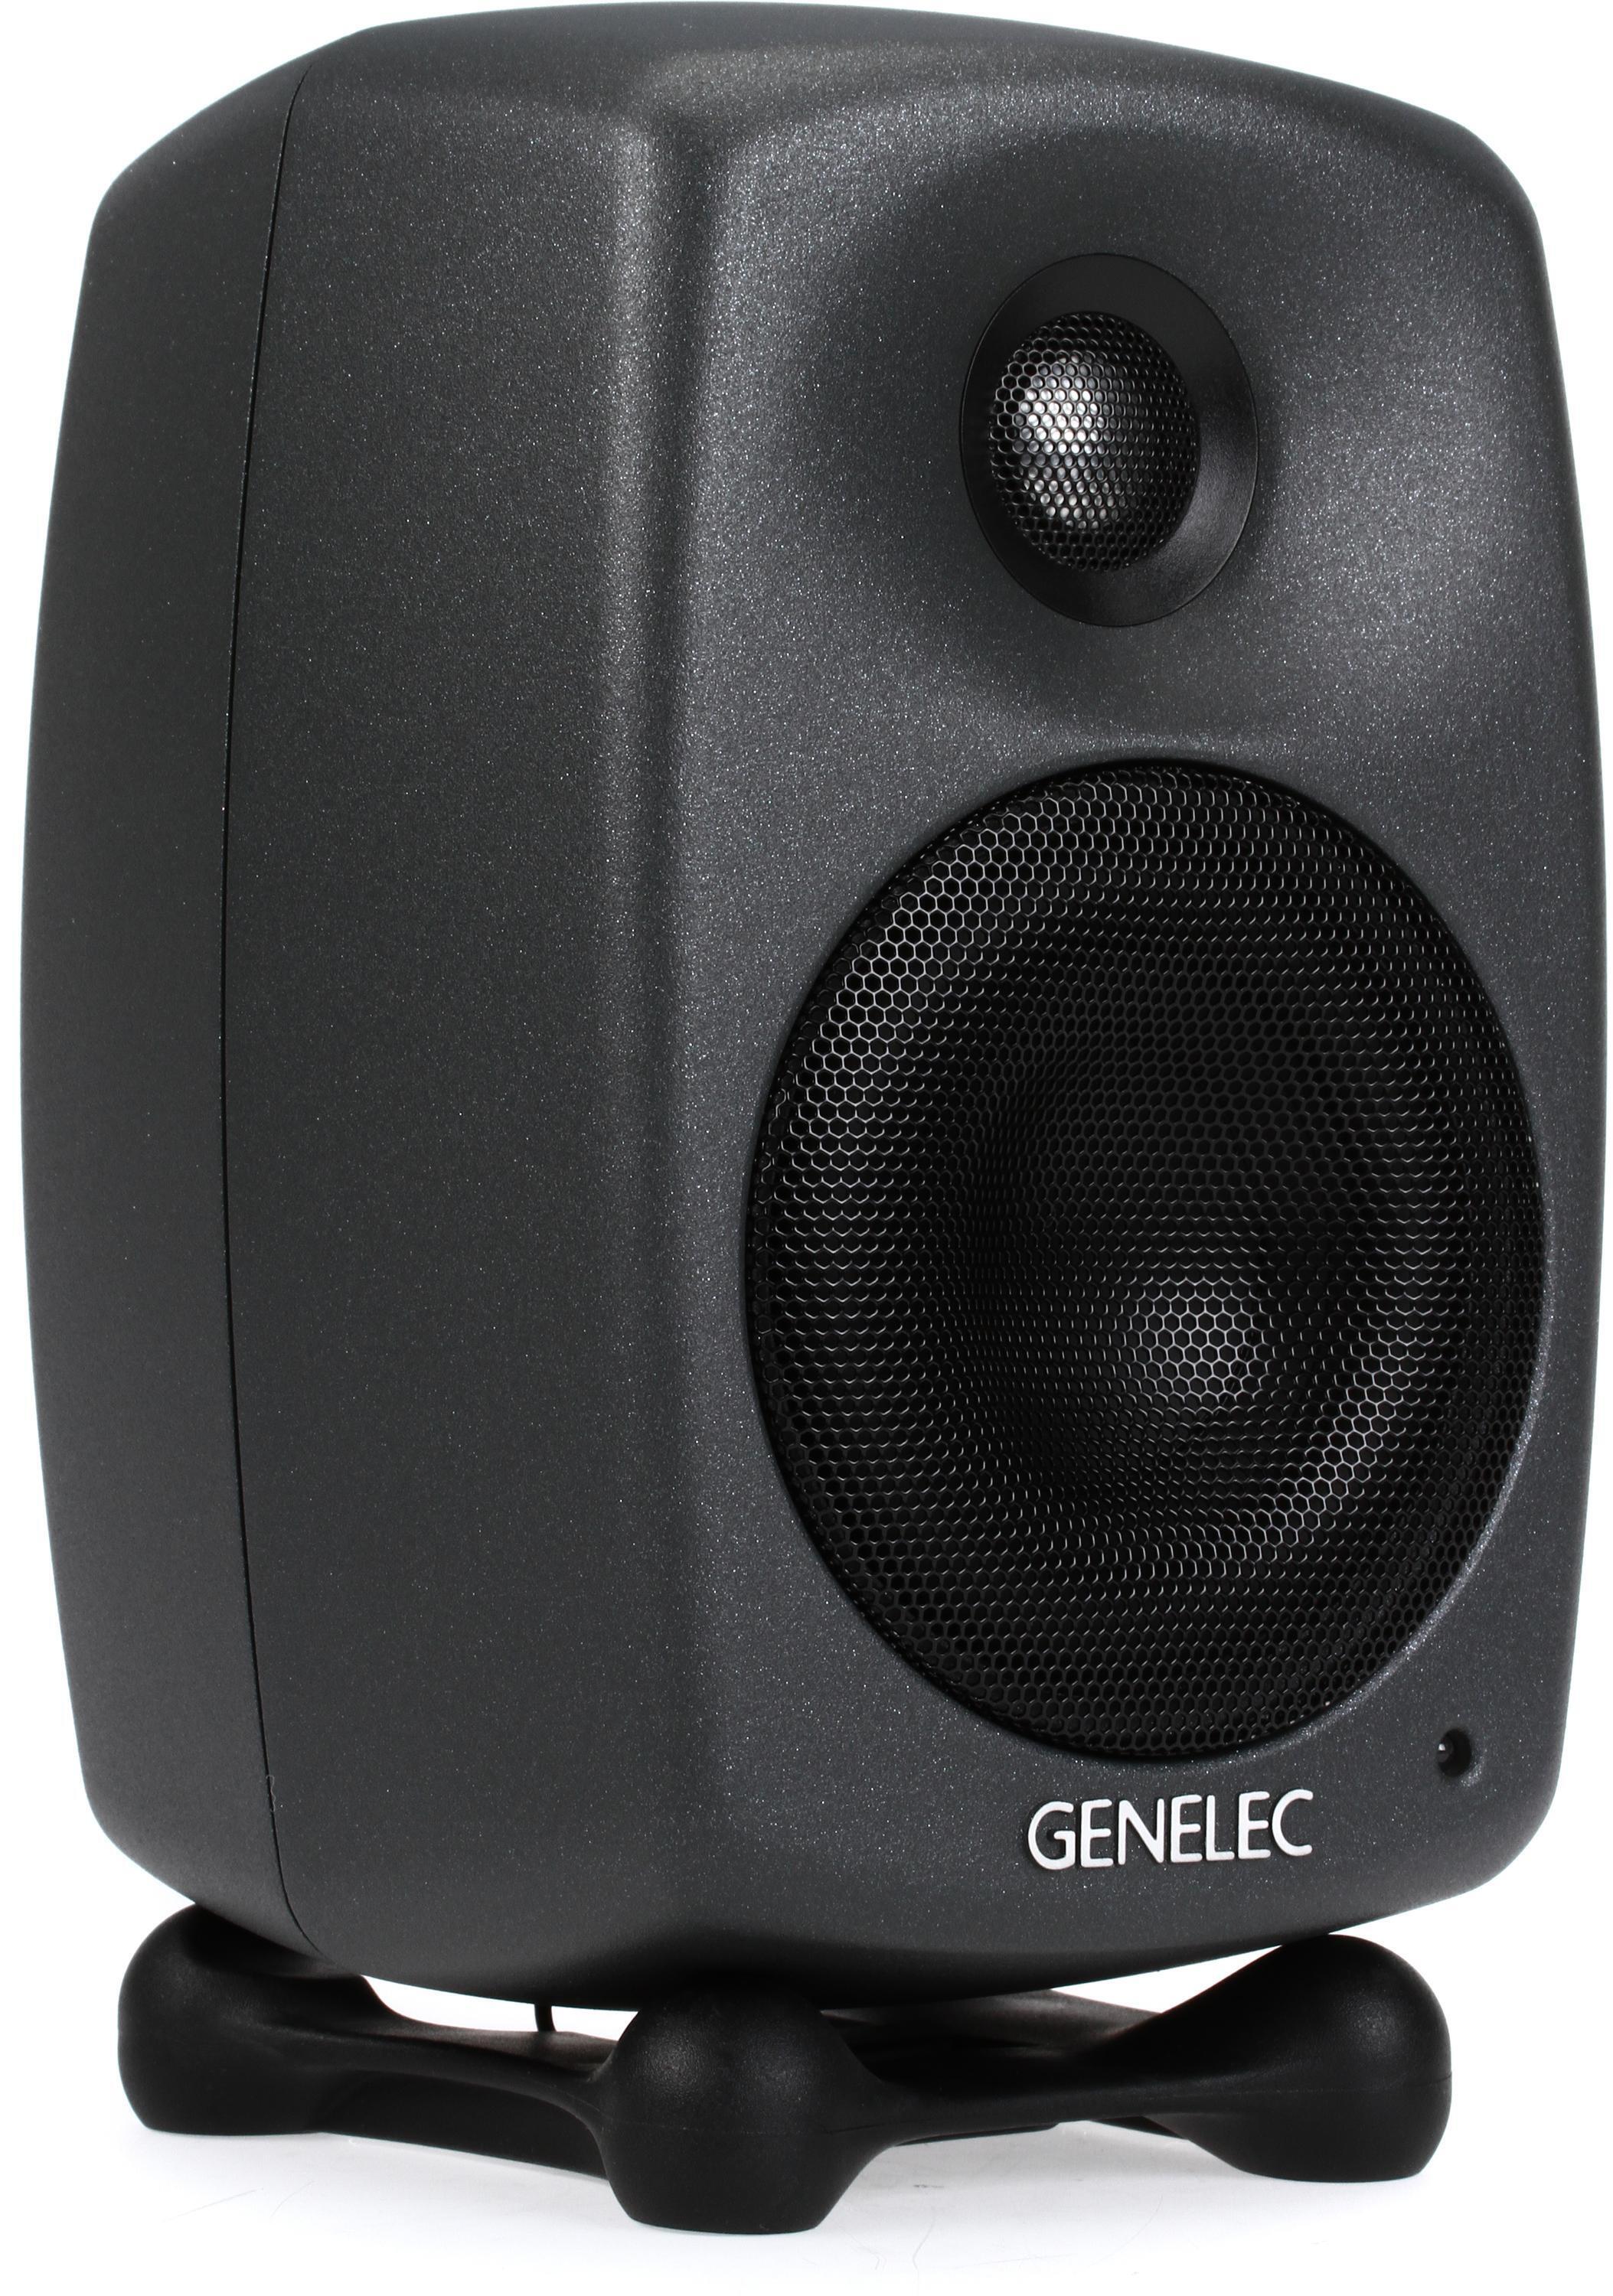 Bundled Item: Genelec 8320A 4 inch Powered Studio Monitor